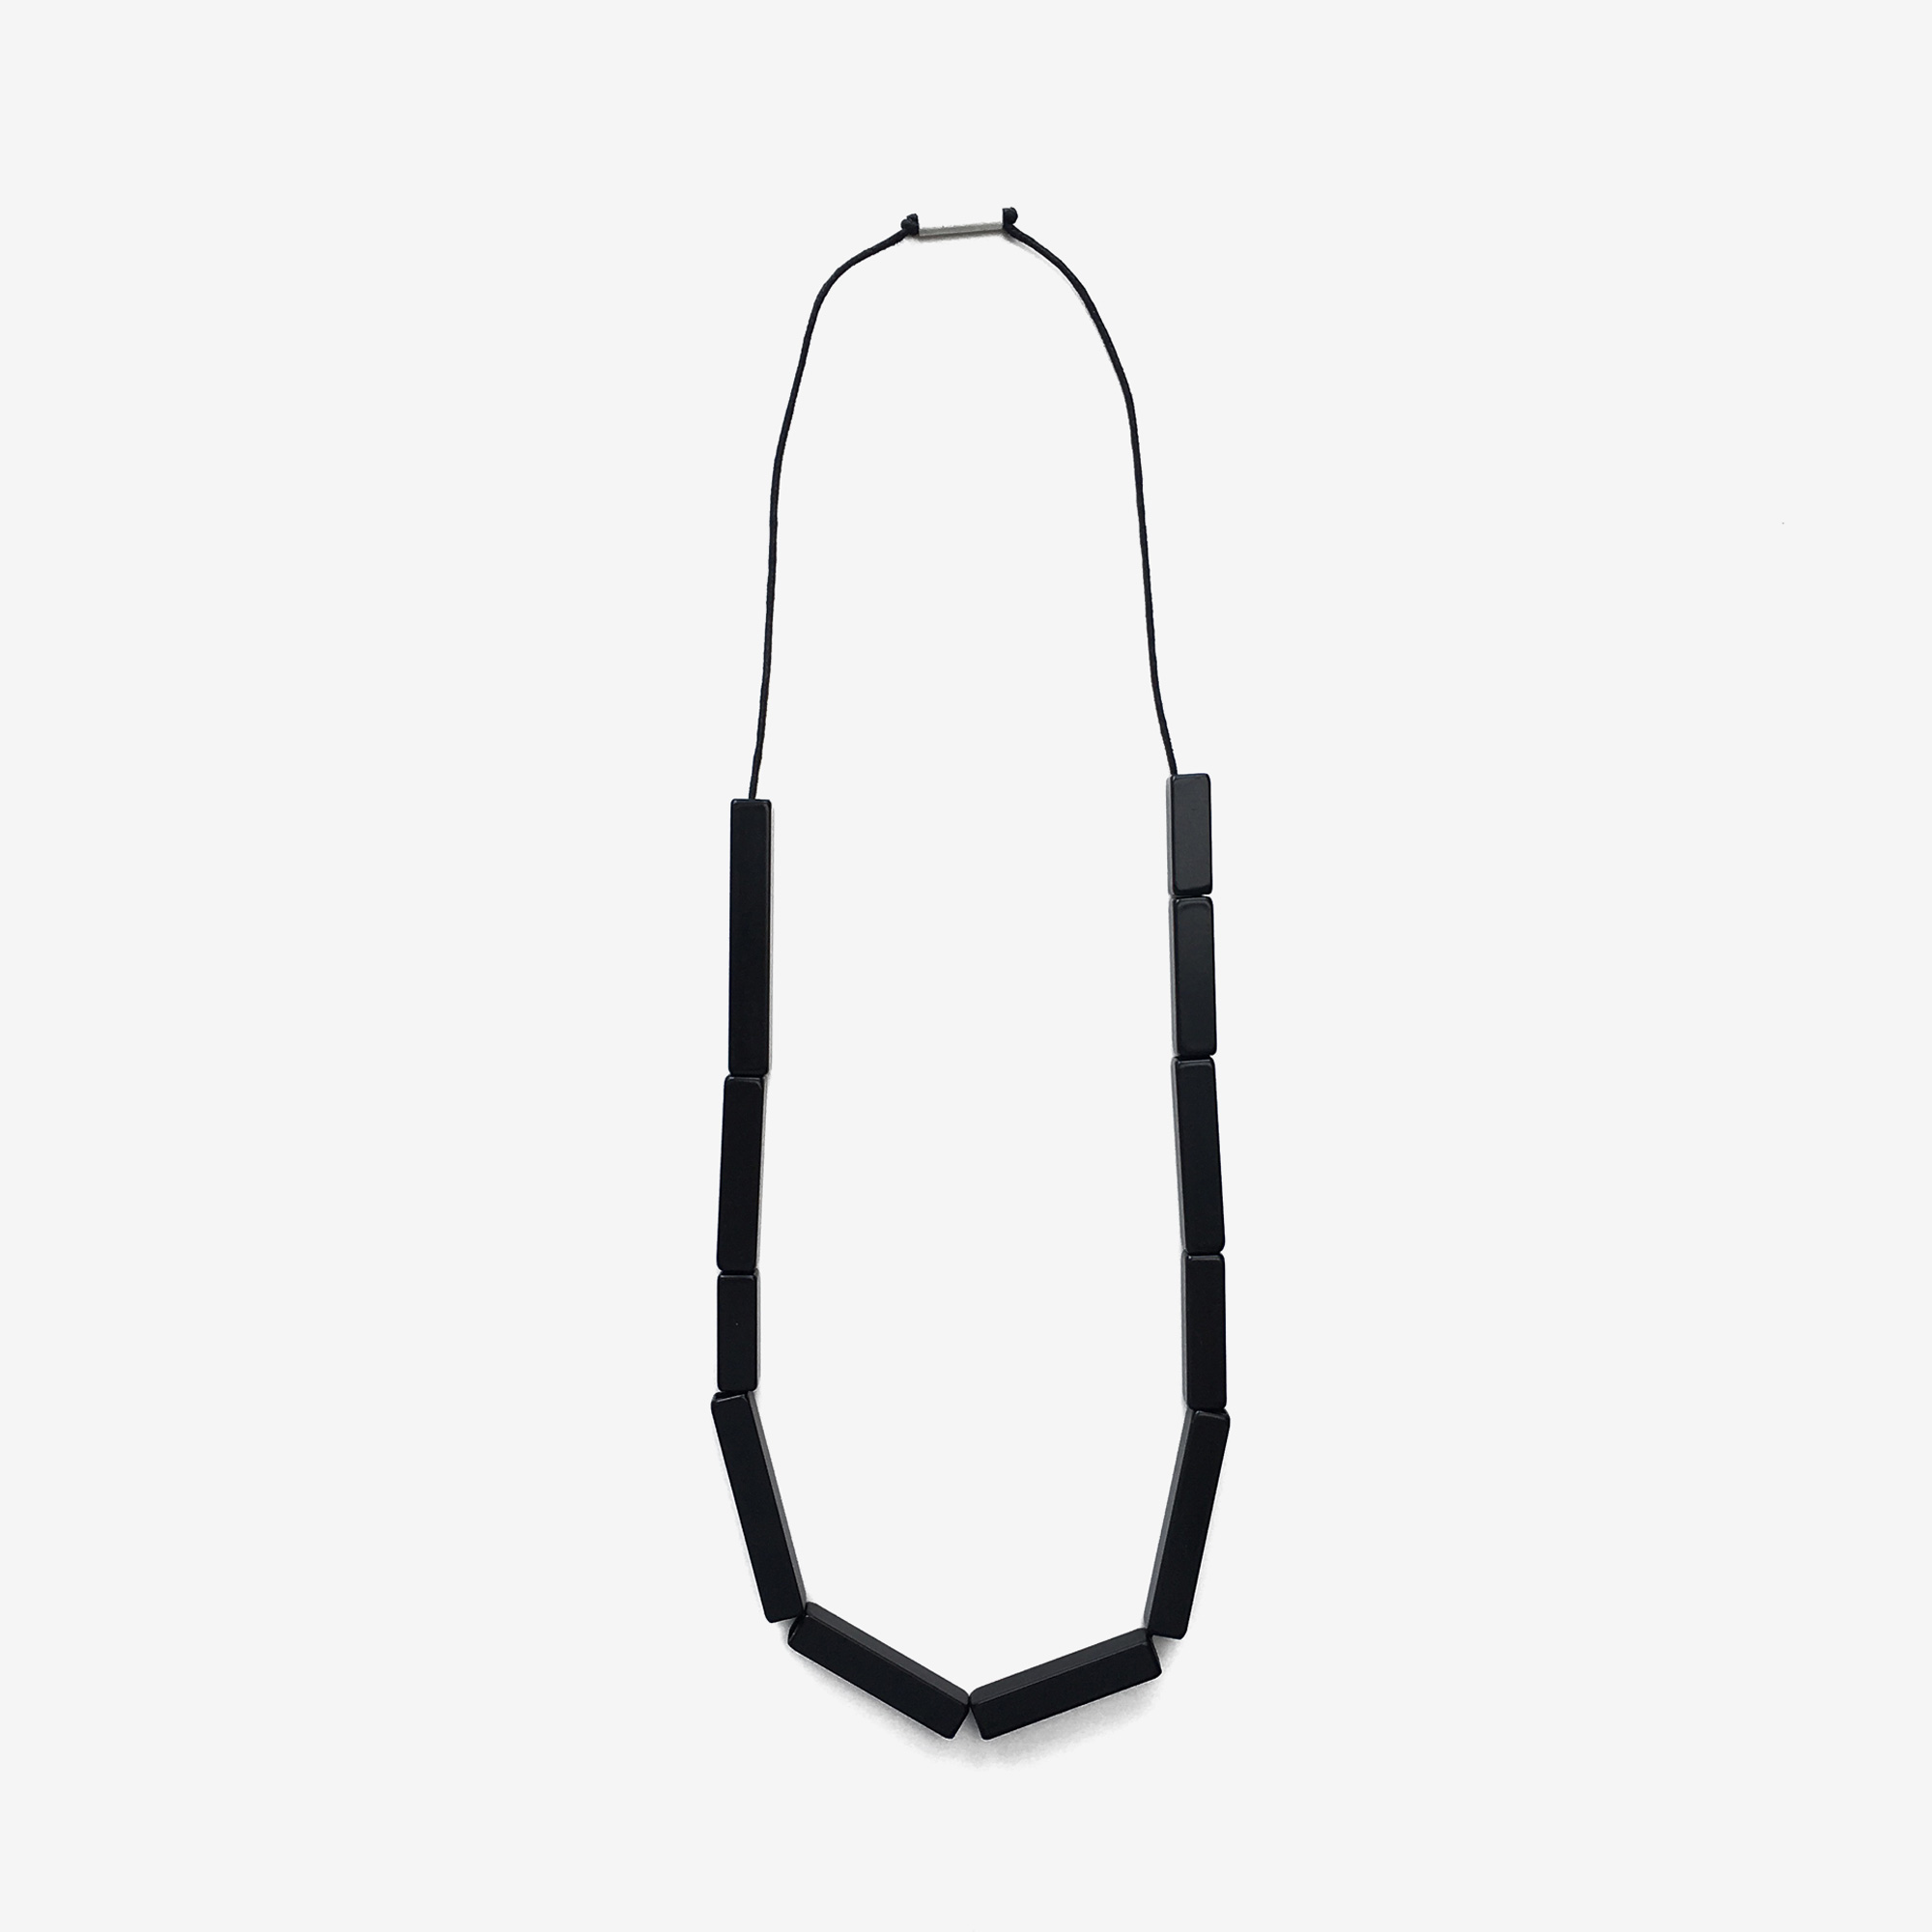 Black Mamba necklace - NURA.design